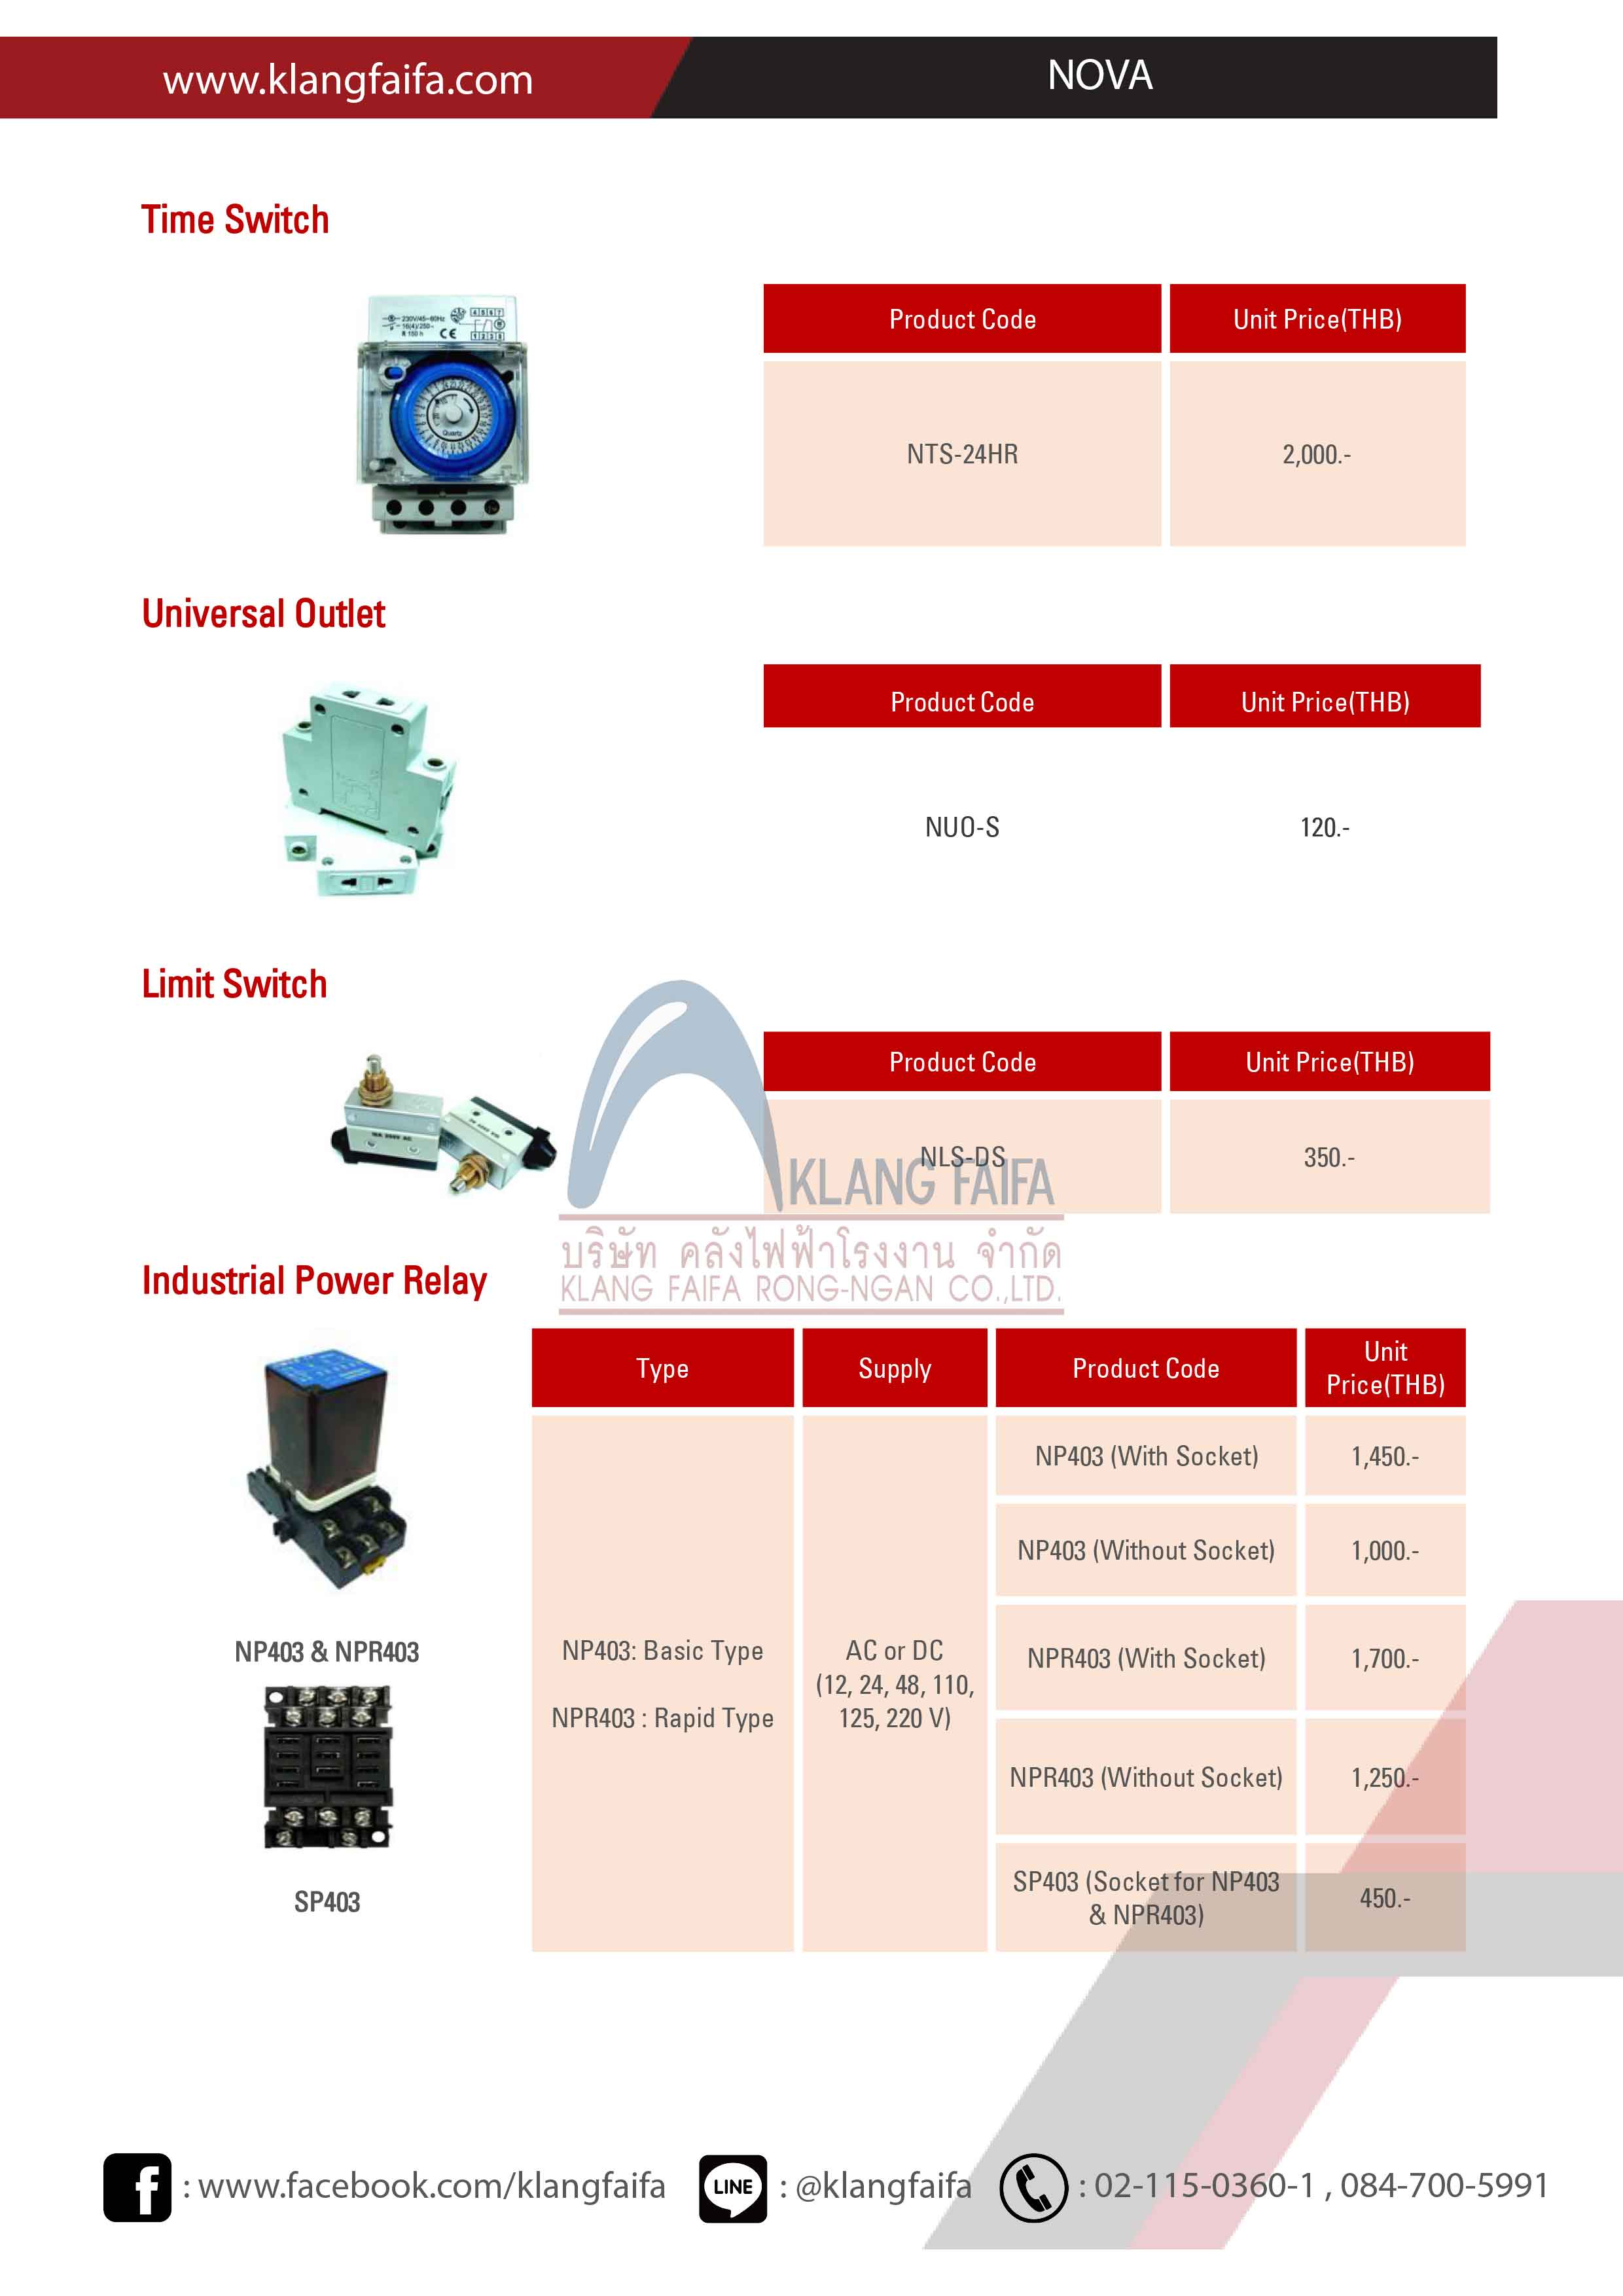 Pilot lamp, LED lamp, Push button switch, Selector switch, Semaphore, Indicator, Minature Buzzer, Space Heater, Thermostat